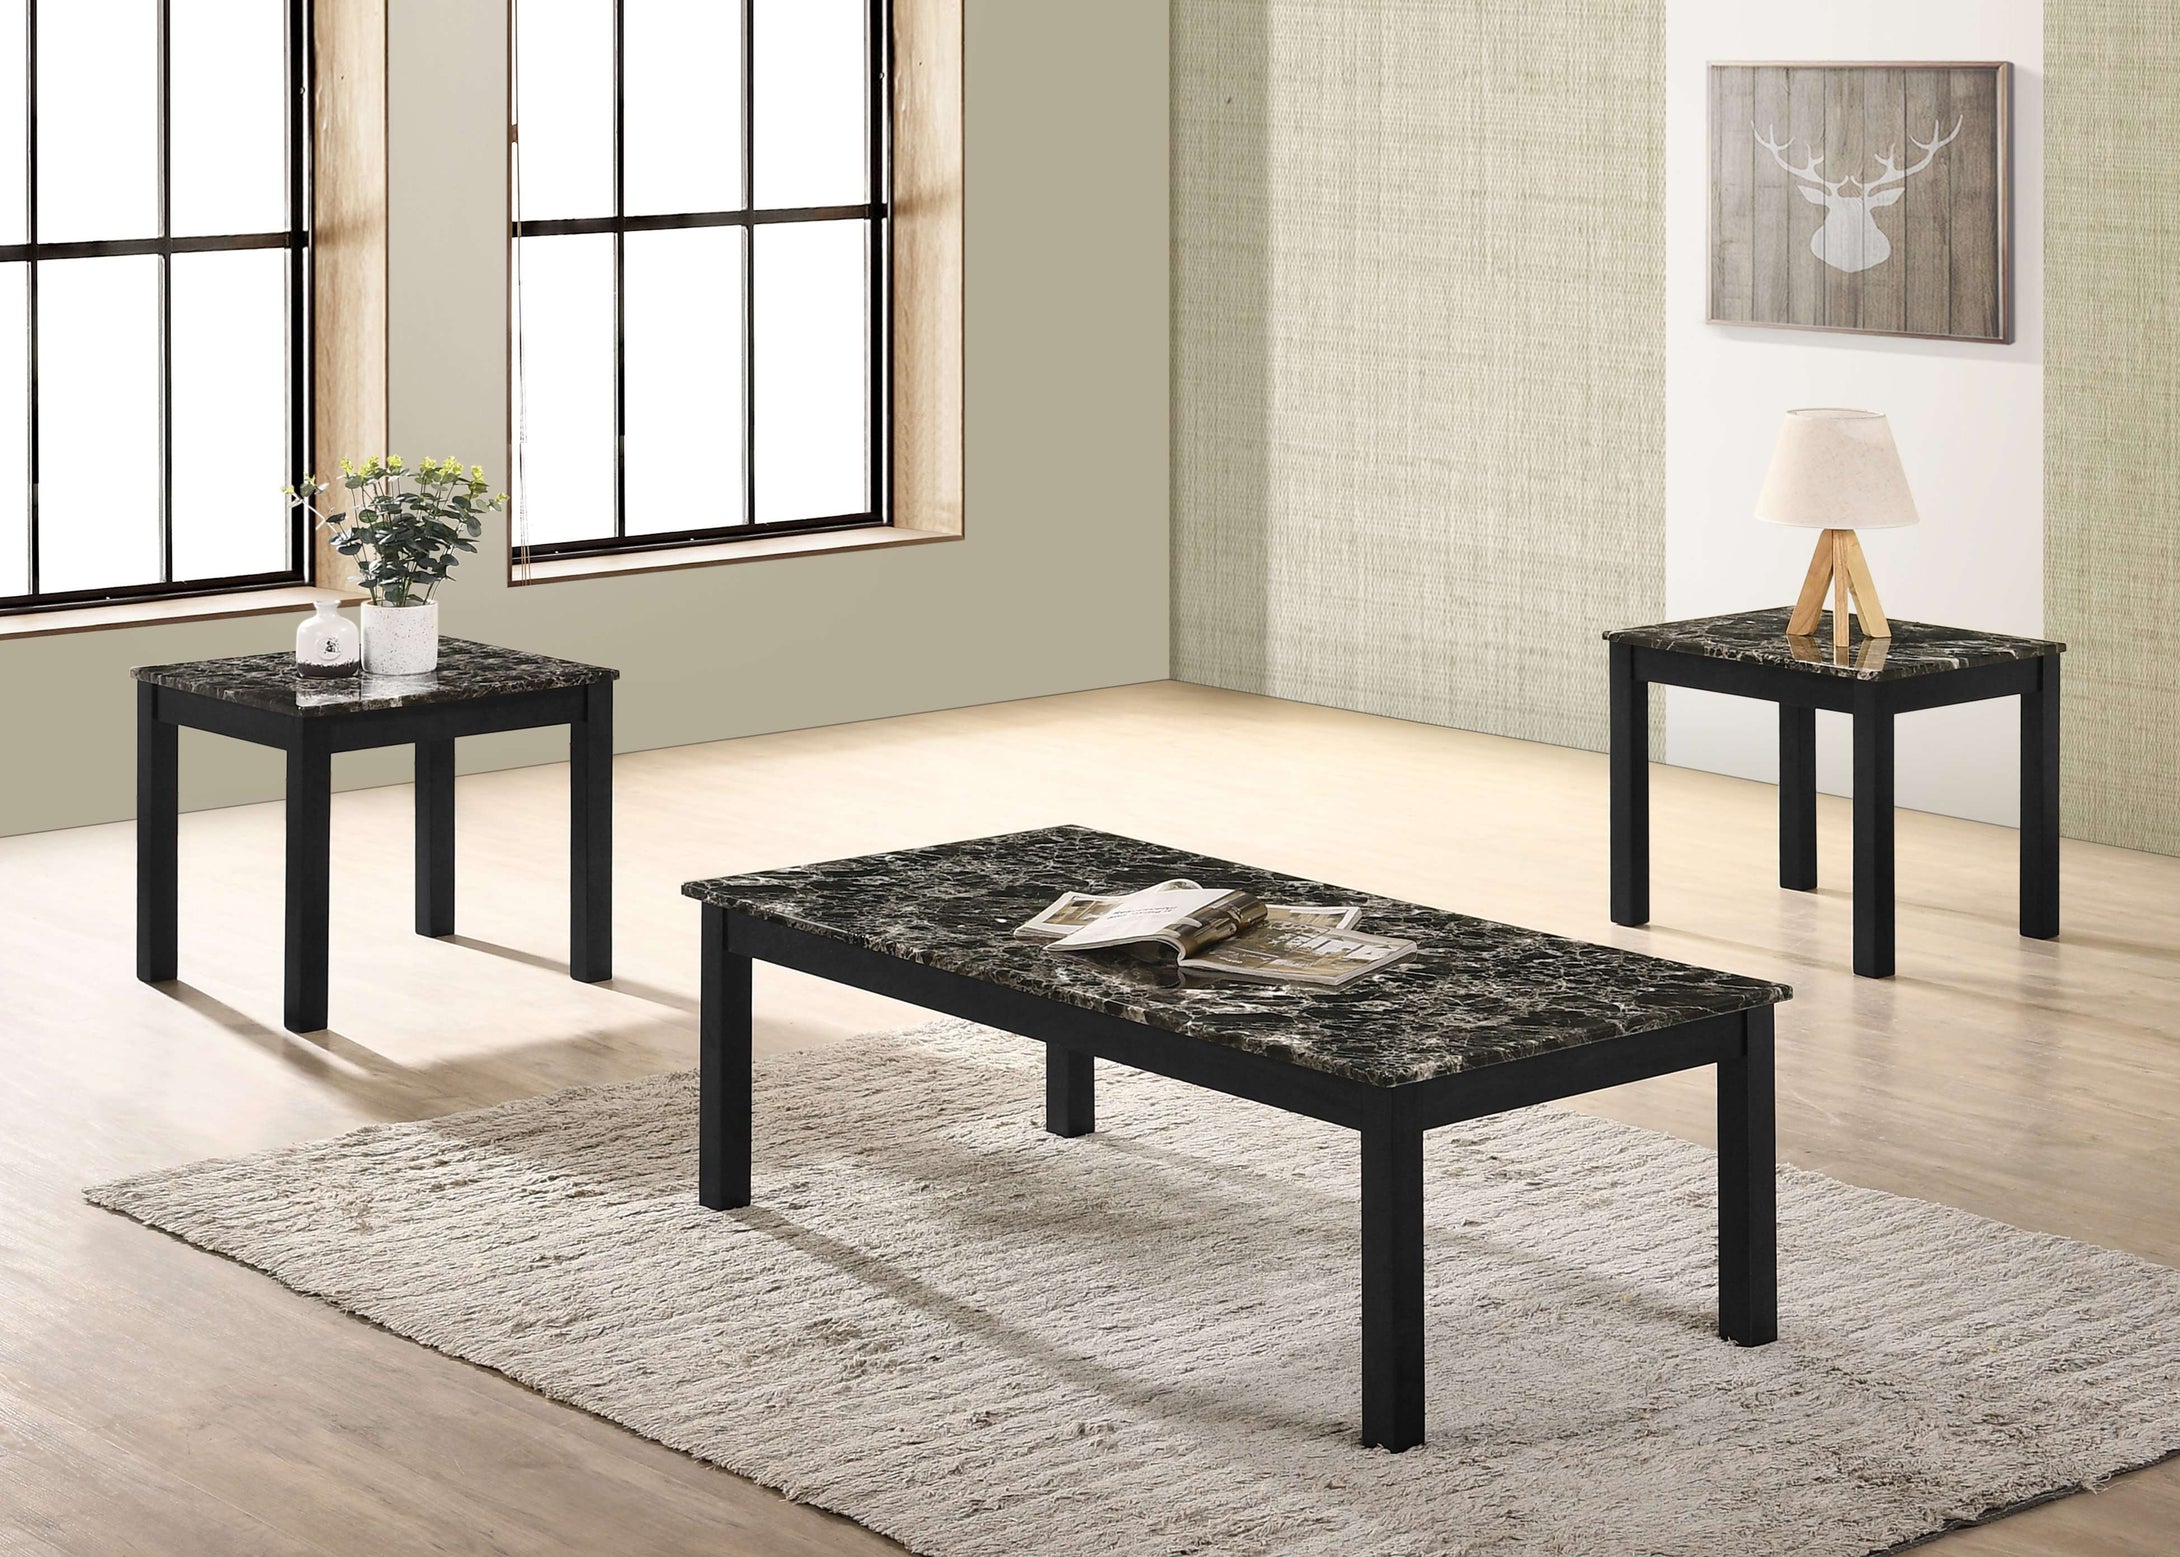 Linda Coffee Table Set - Richicollection Furniture Warehouse